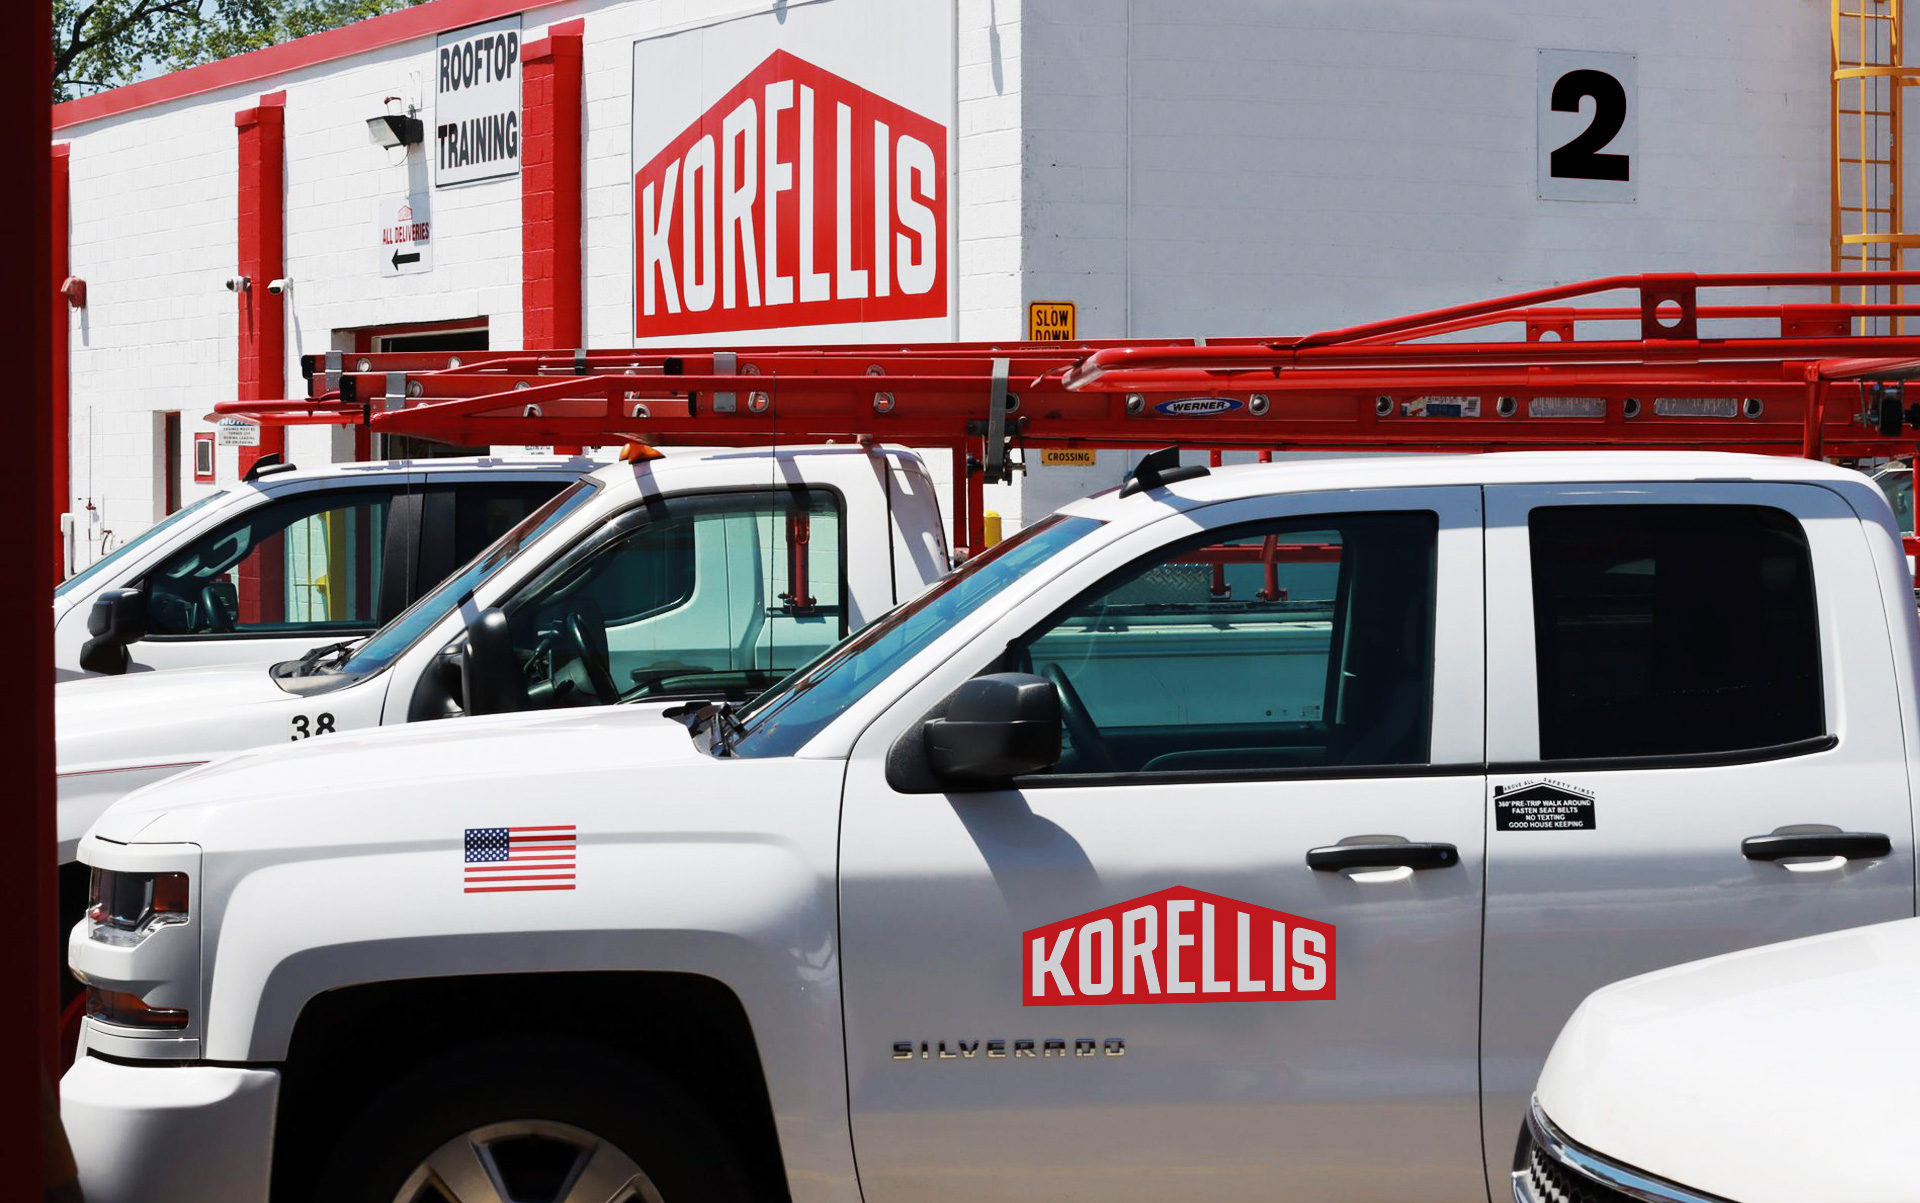 Korellis work trucks parked at HQ